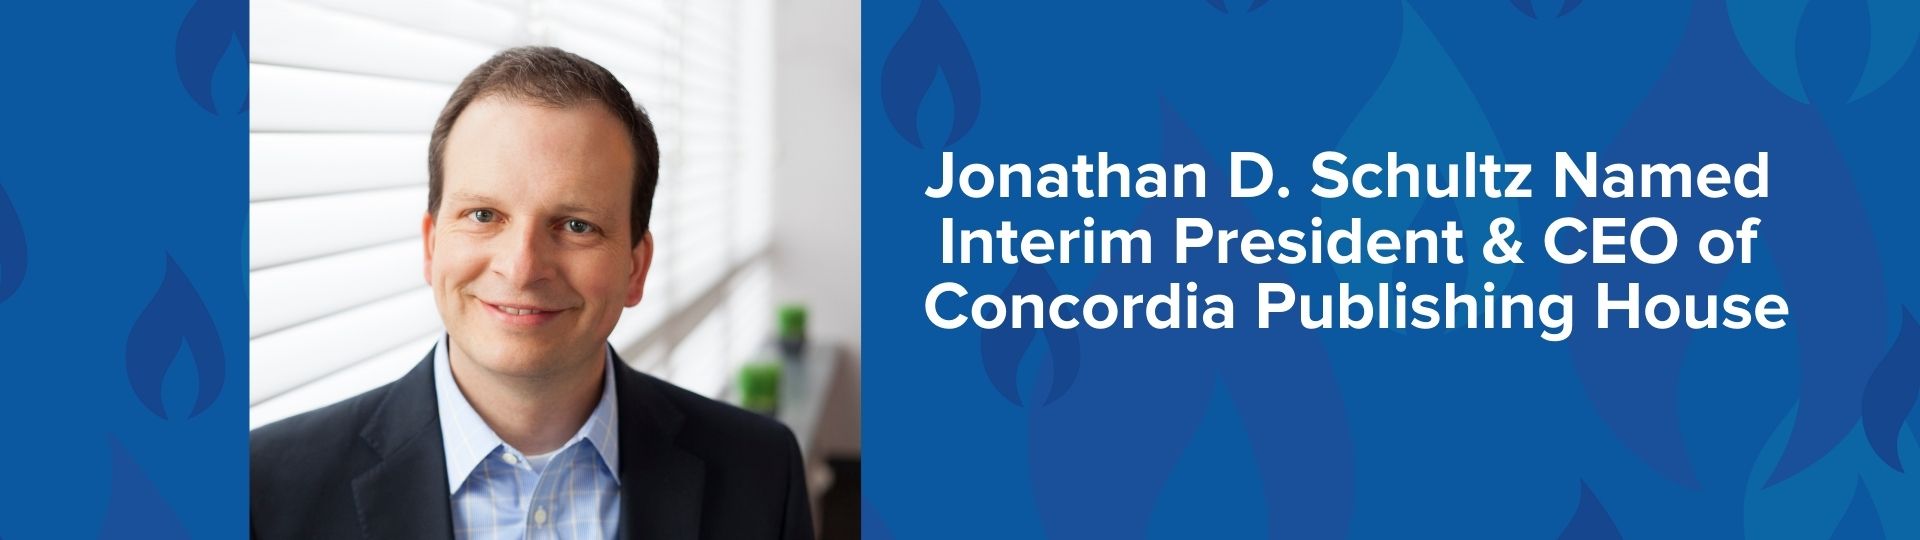 Jonathan D. Schultz Named Interim President & CEO of Concordia Publishing House